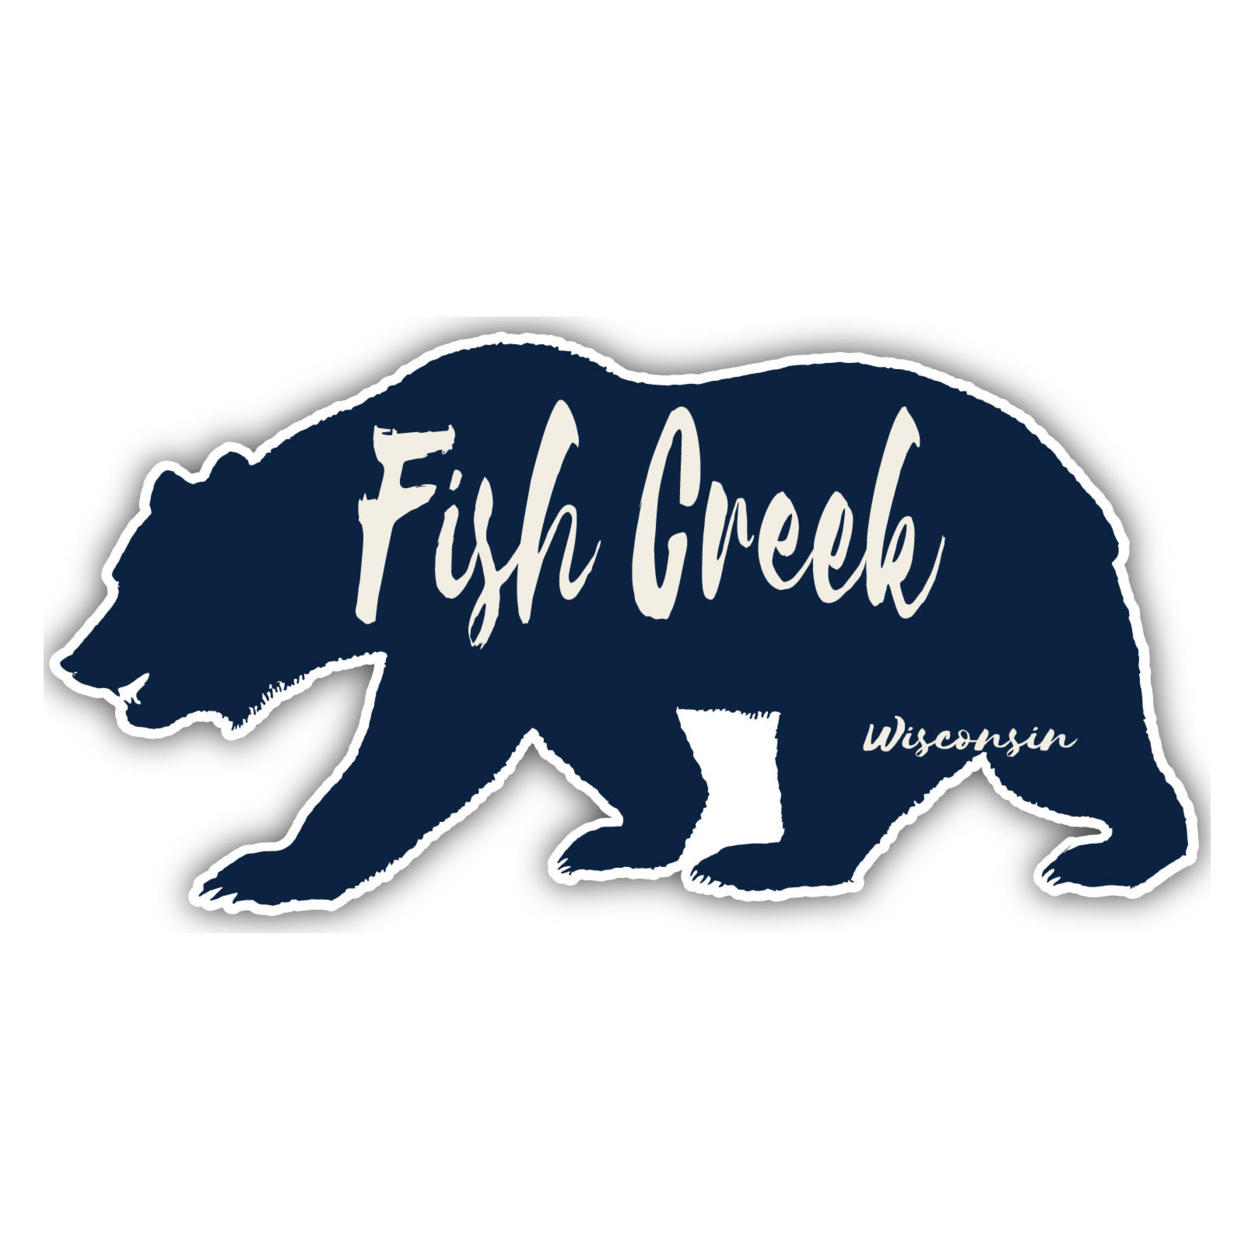 Fish Creek Wisconsin Souvenir Decorative Stickers (Choose Theme And Size) - Single Unit, 12-Inch, Bear